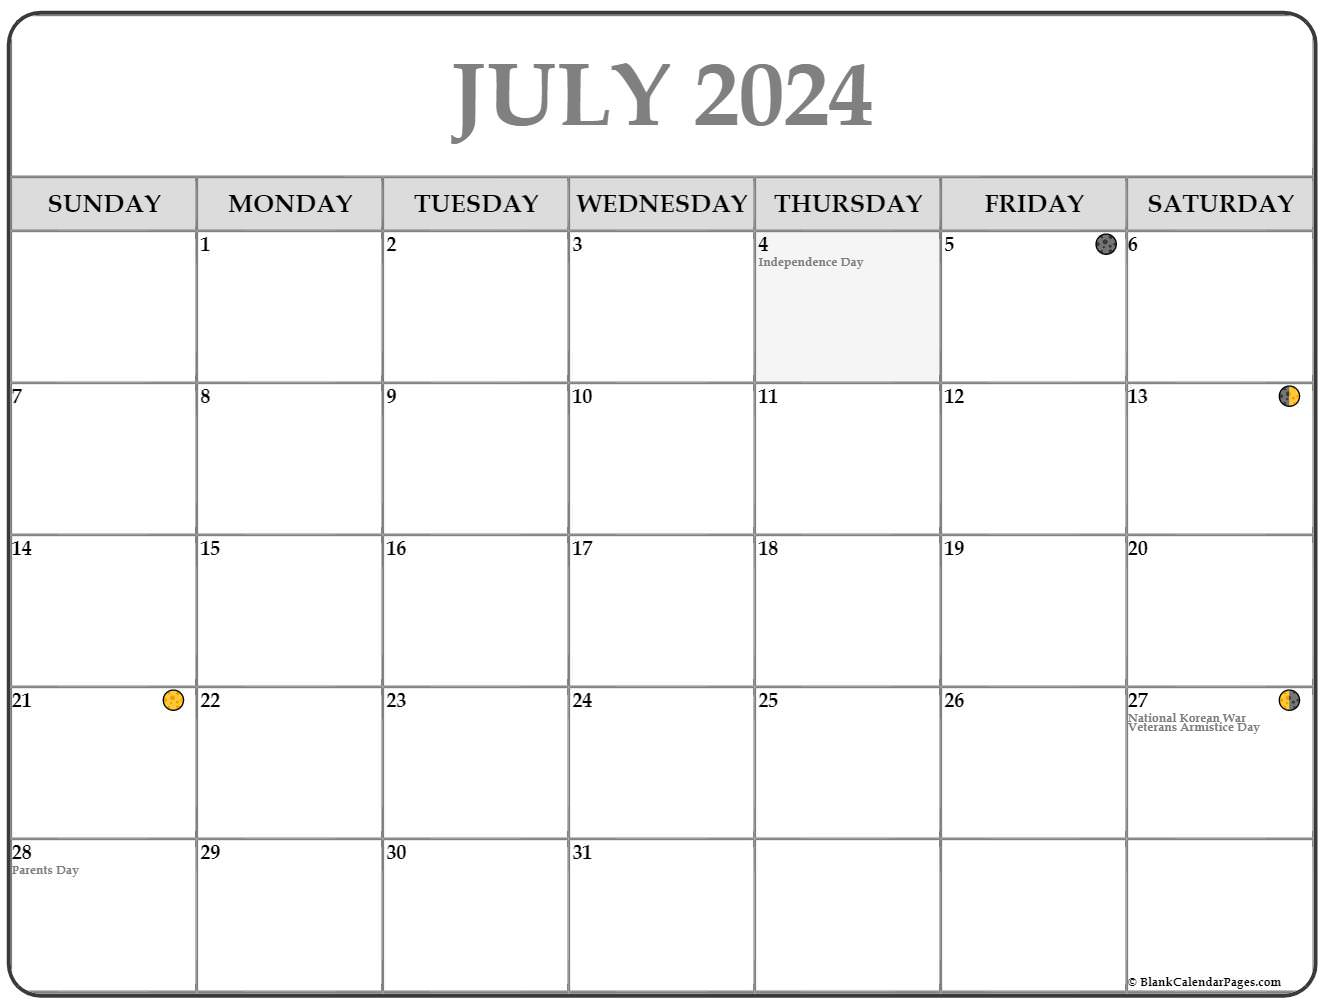 July 2024 Lunar Calendar | Moon Phase Calendar | Moon Calendar For July 2024